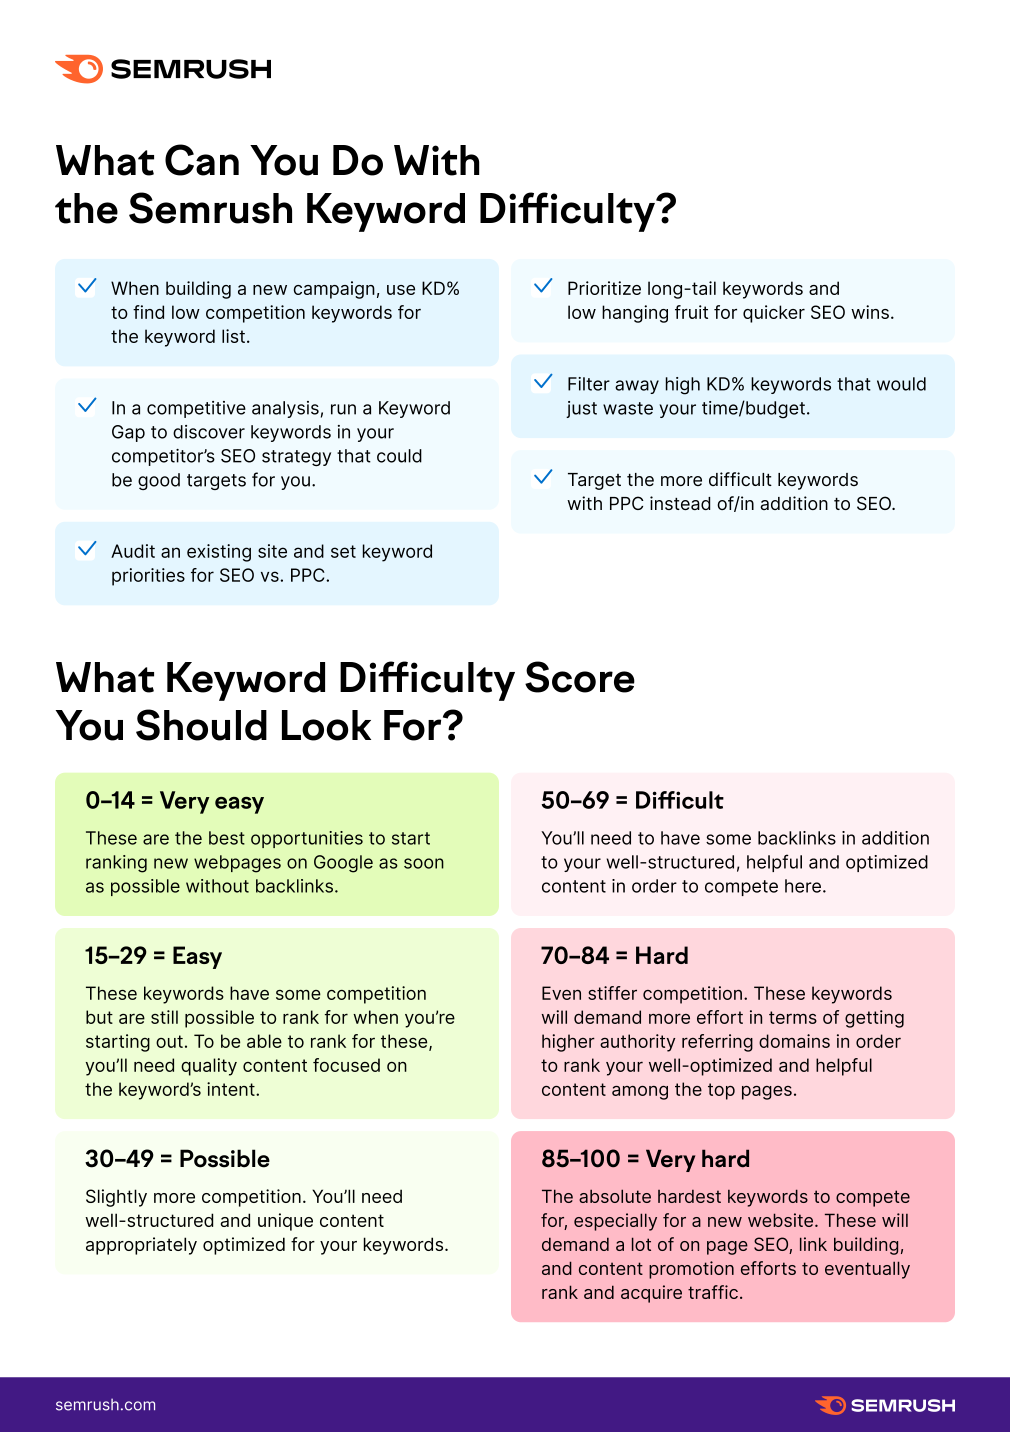 How do you analyze keyword difficulty?